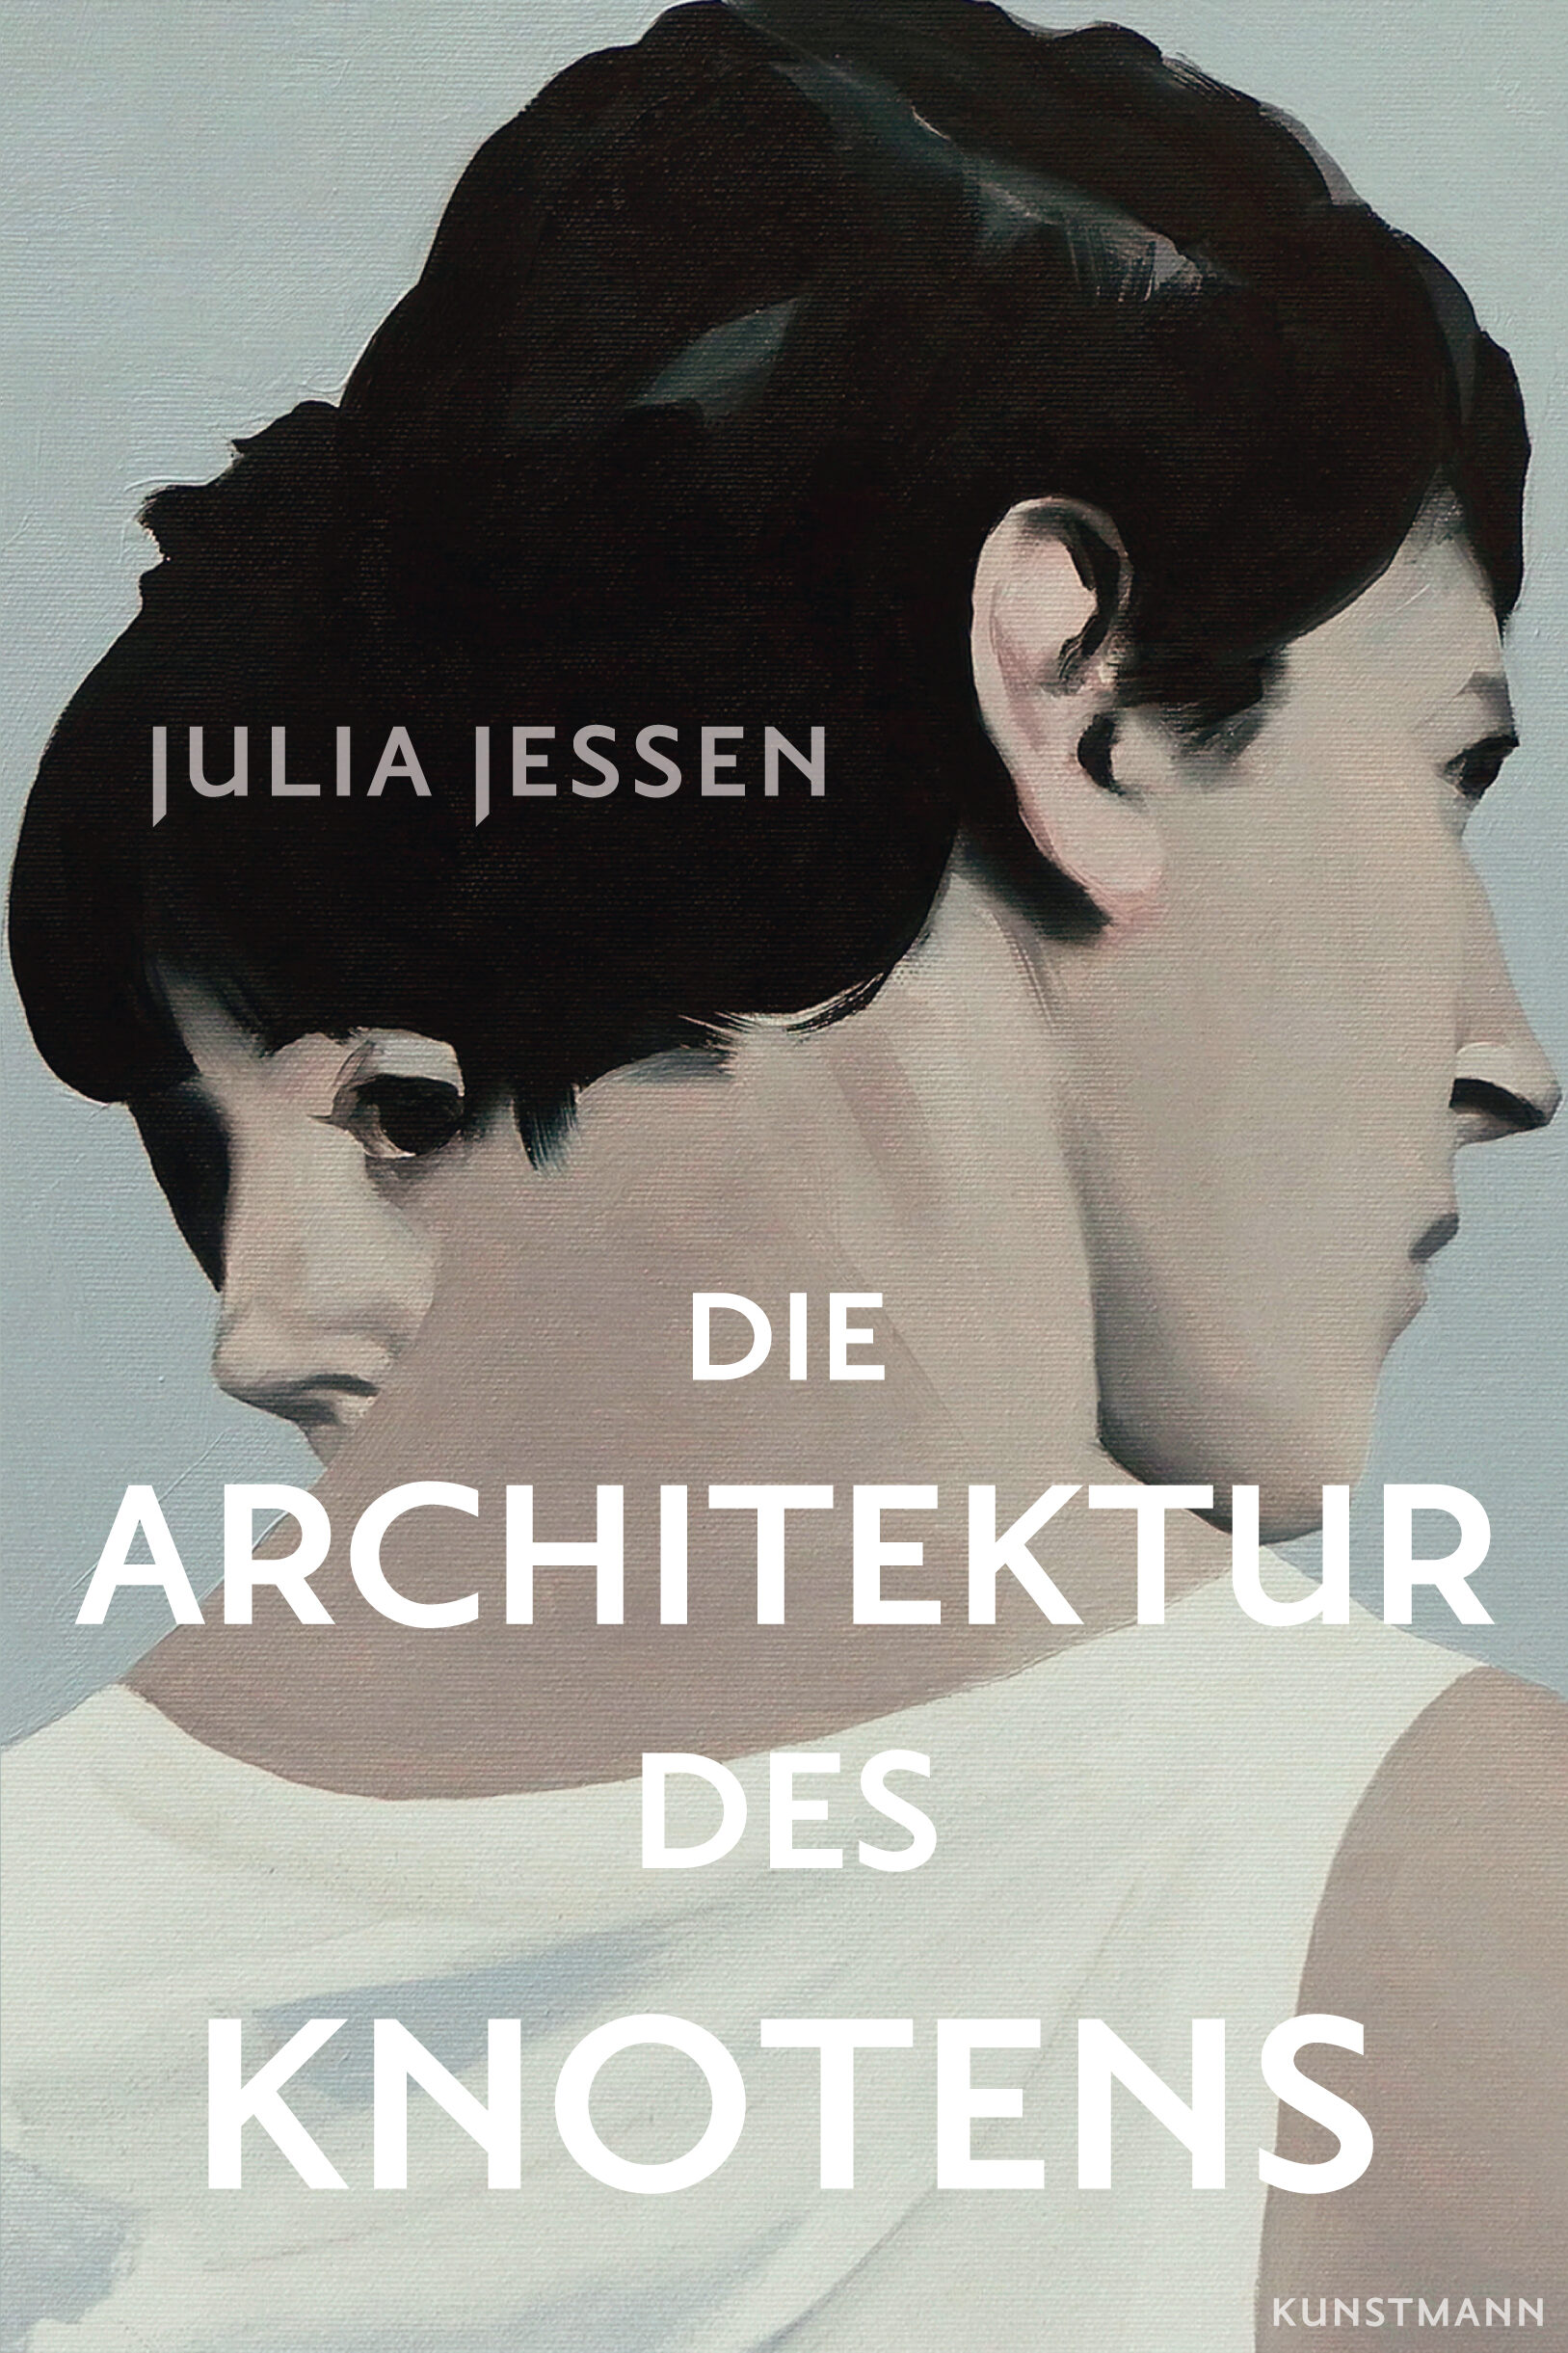 die architektur des knotens, Julia Jessen, roman, belletristik, literatur